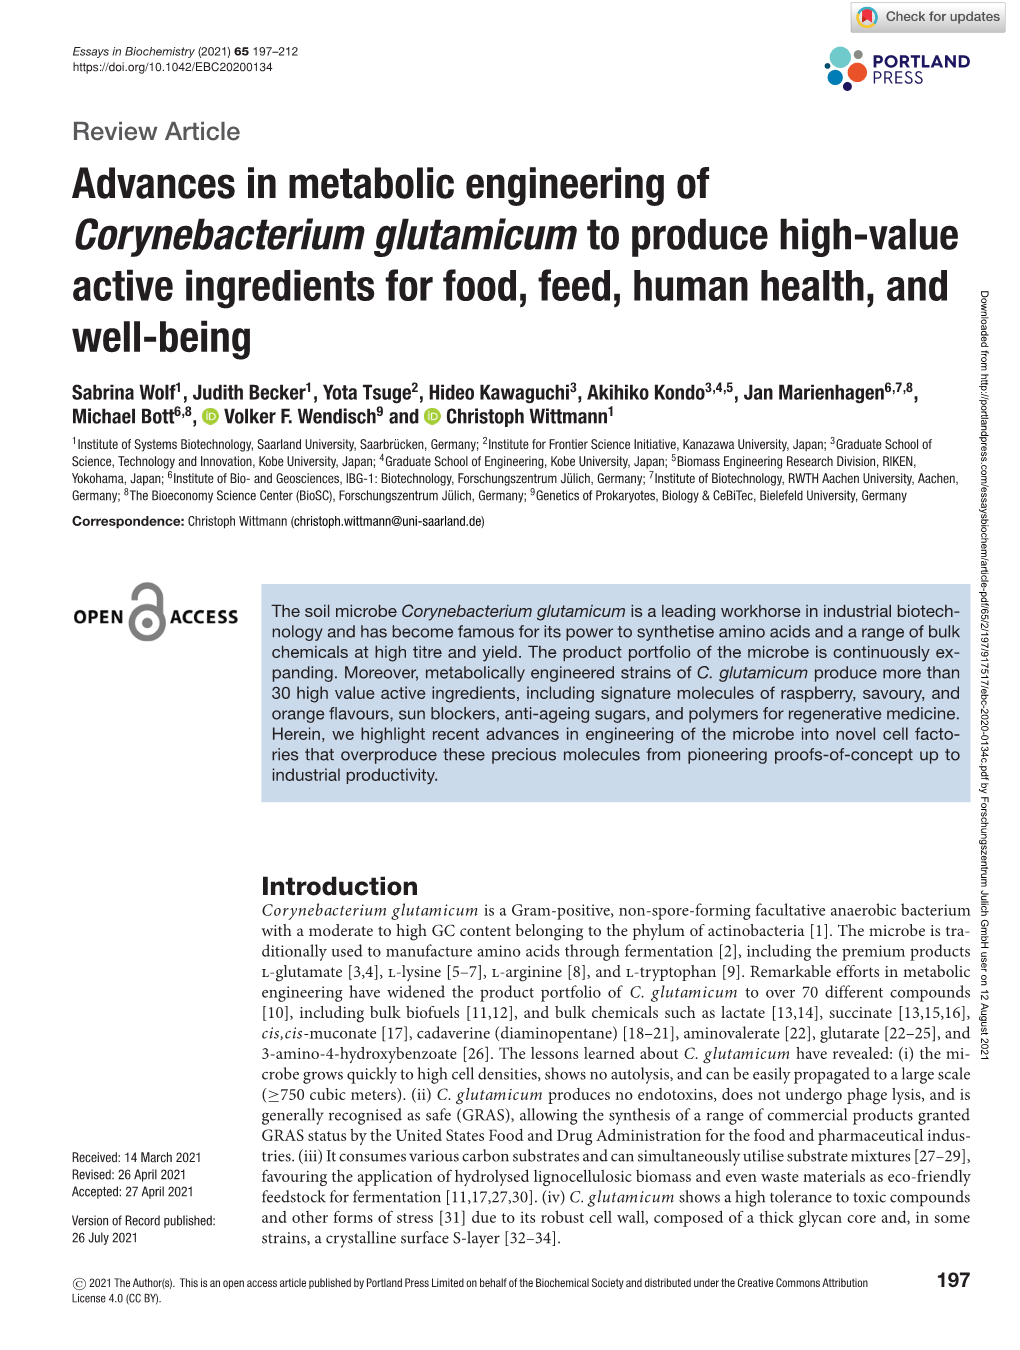 Advances in Metabolic Engineering of Corynebacterium Glutamicum To